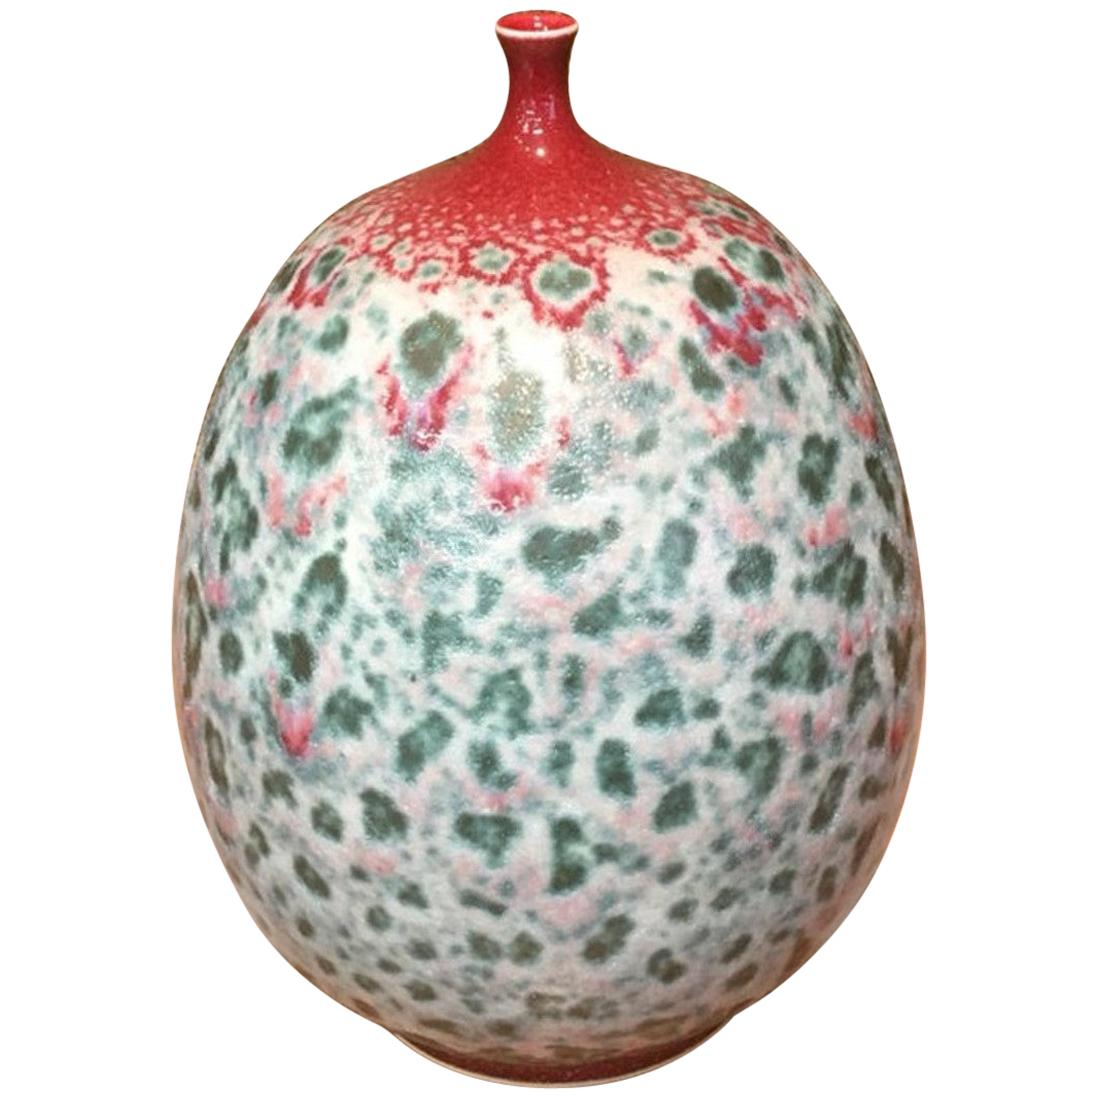 Japanese Contemporary Green Red Hand-Glazed Porcelain Vase by Master Artist